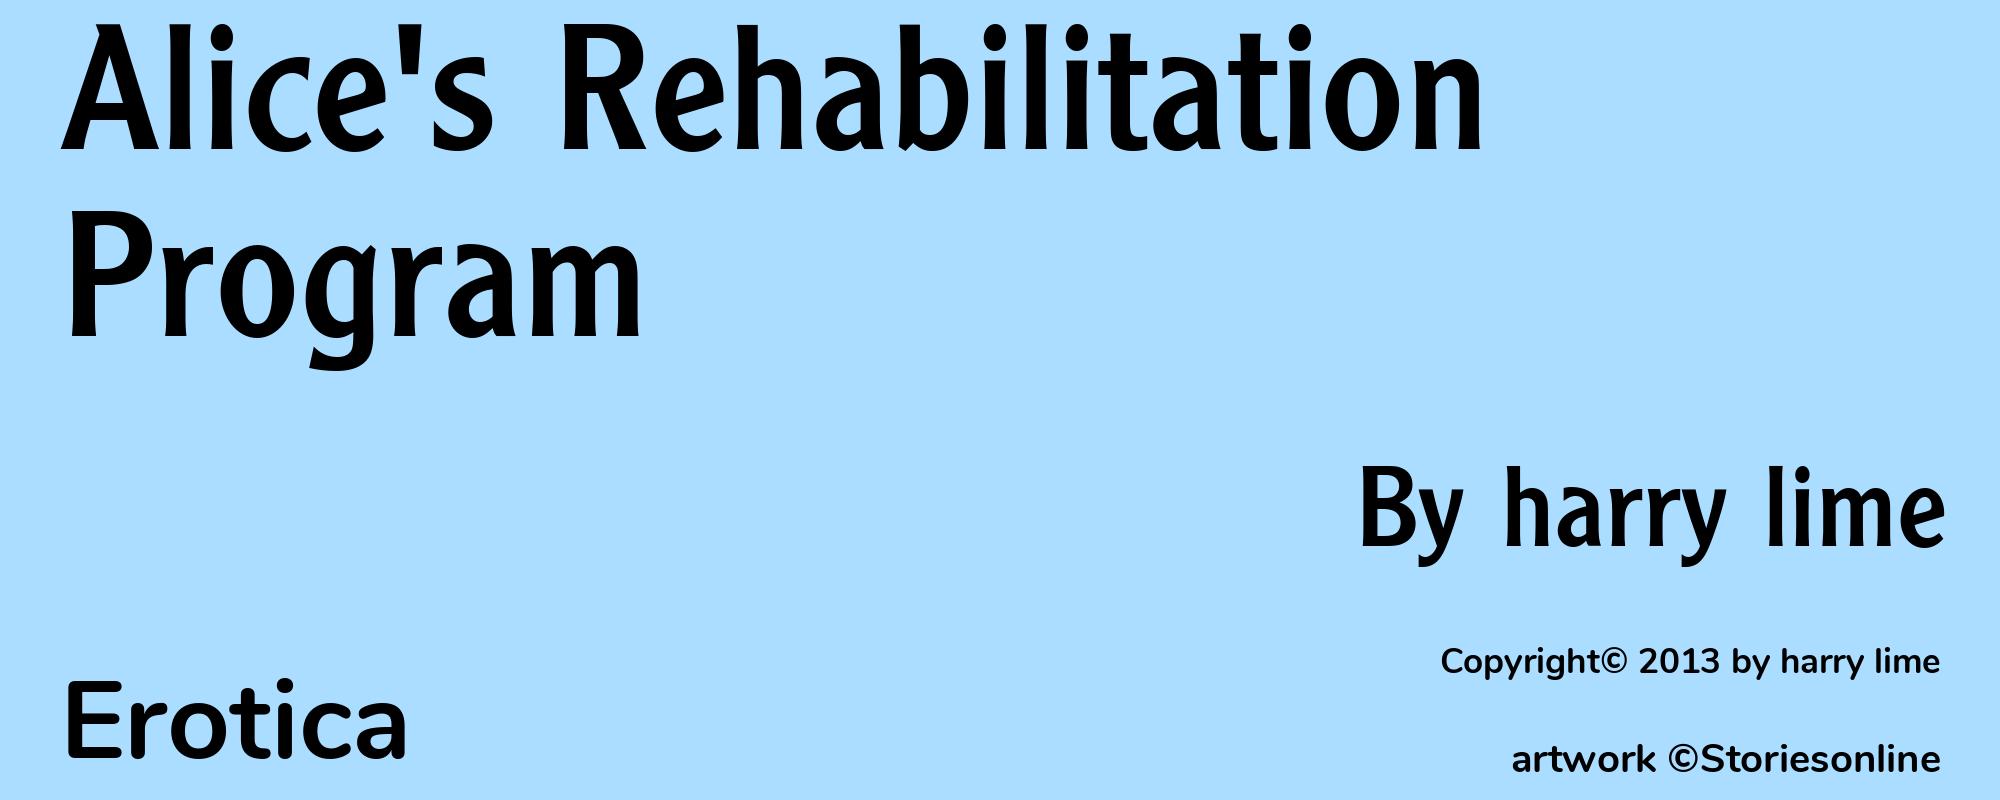 Alice's Rehabilitation Program - Cover